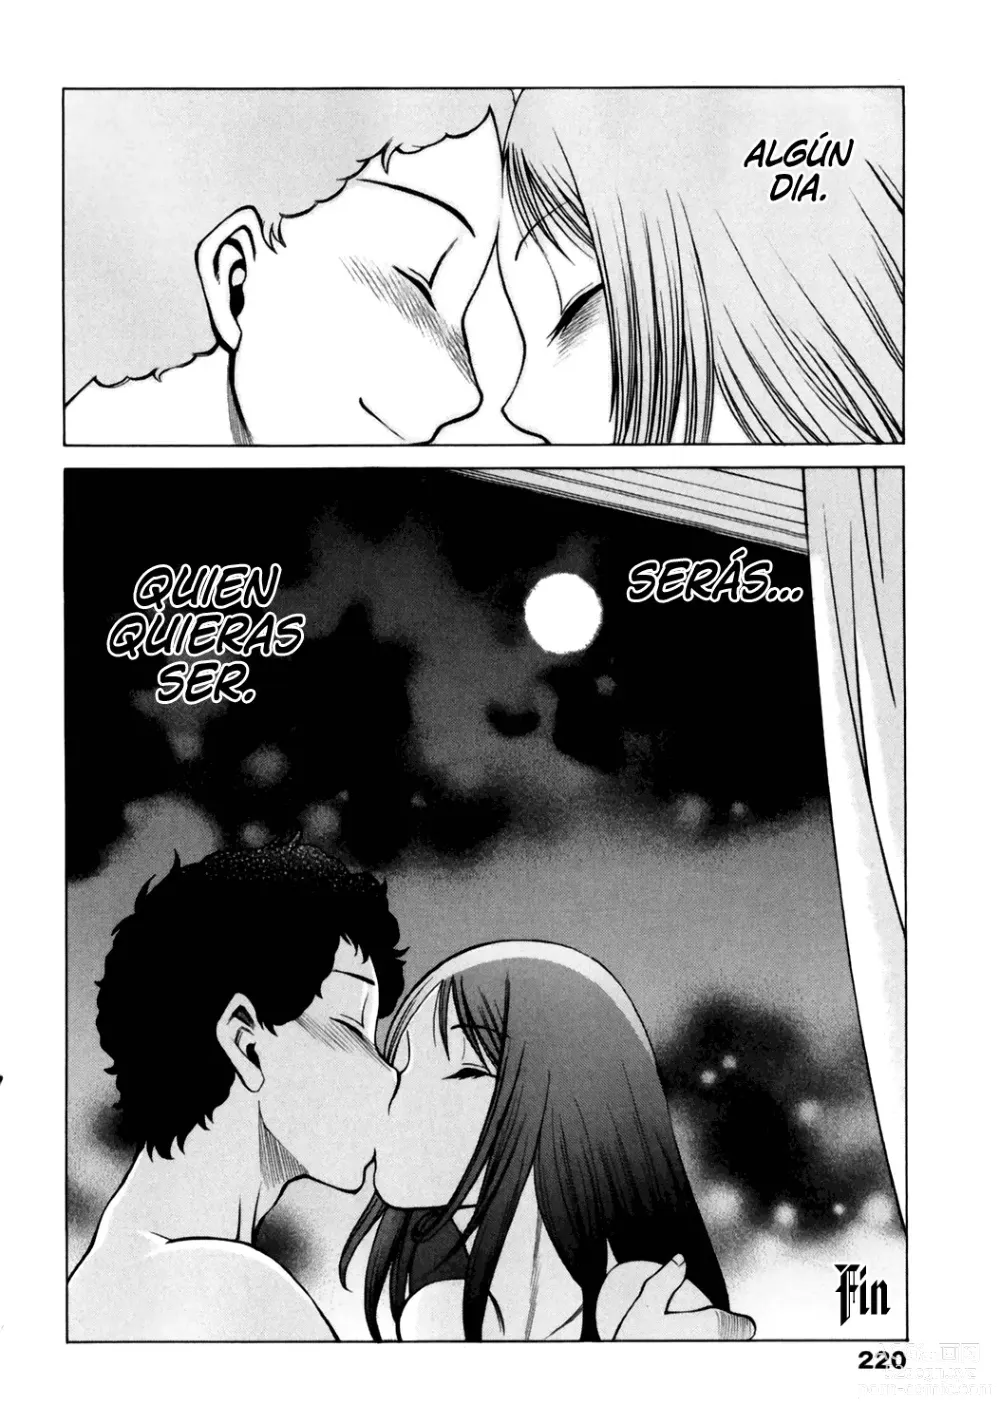 Page 226 of manga Narikiri Lovers